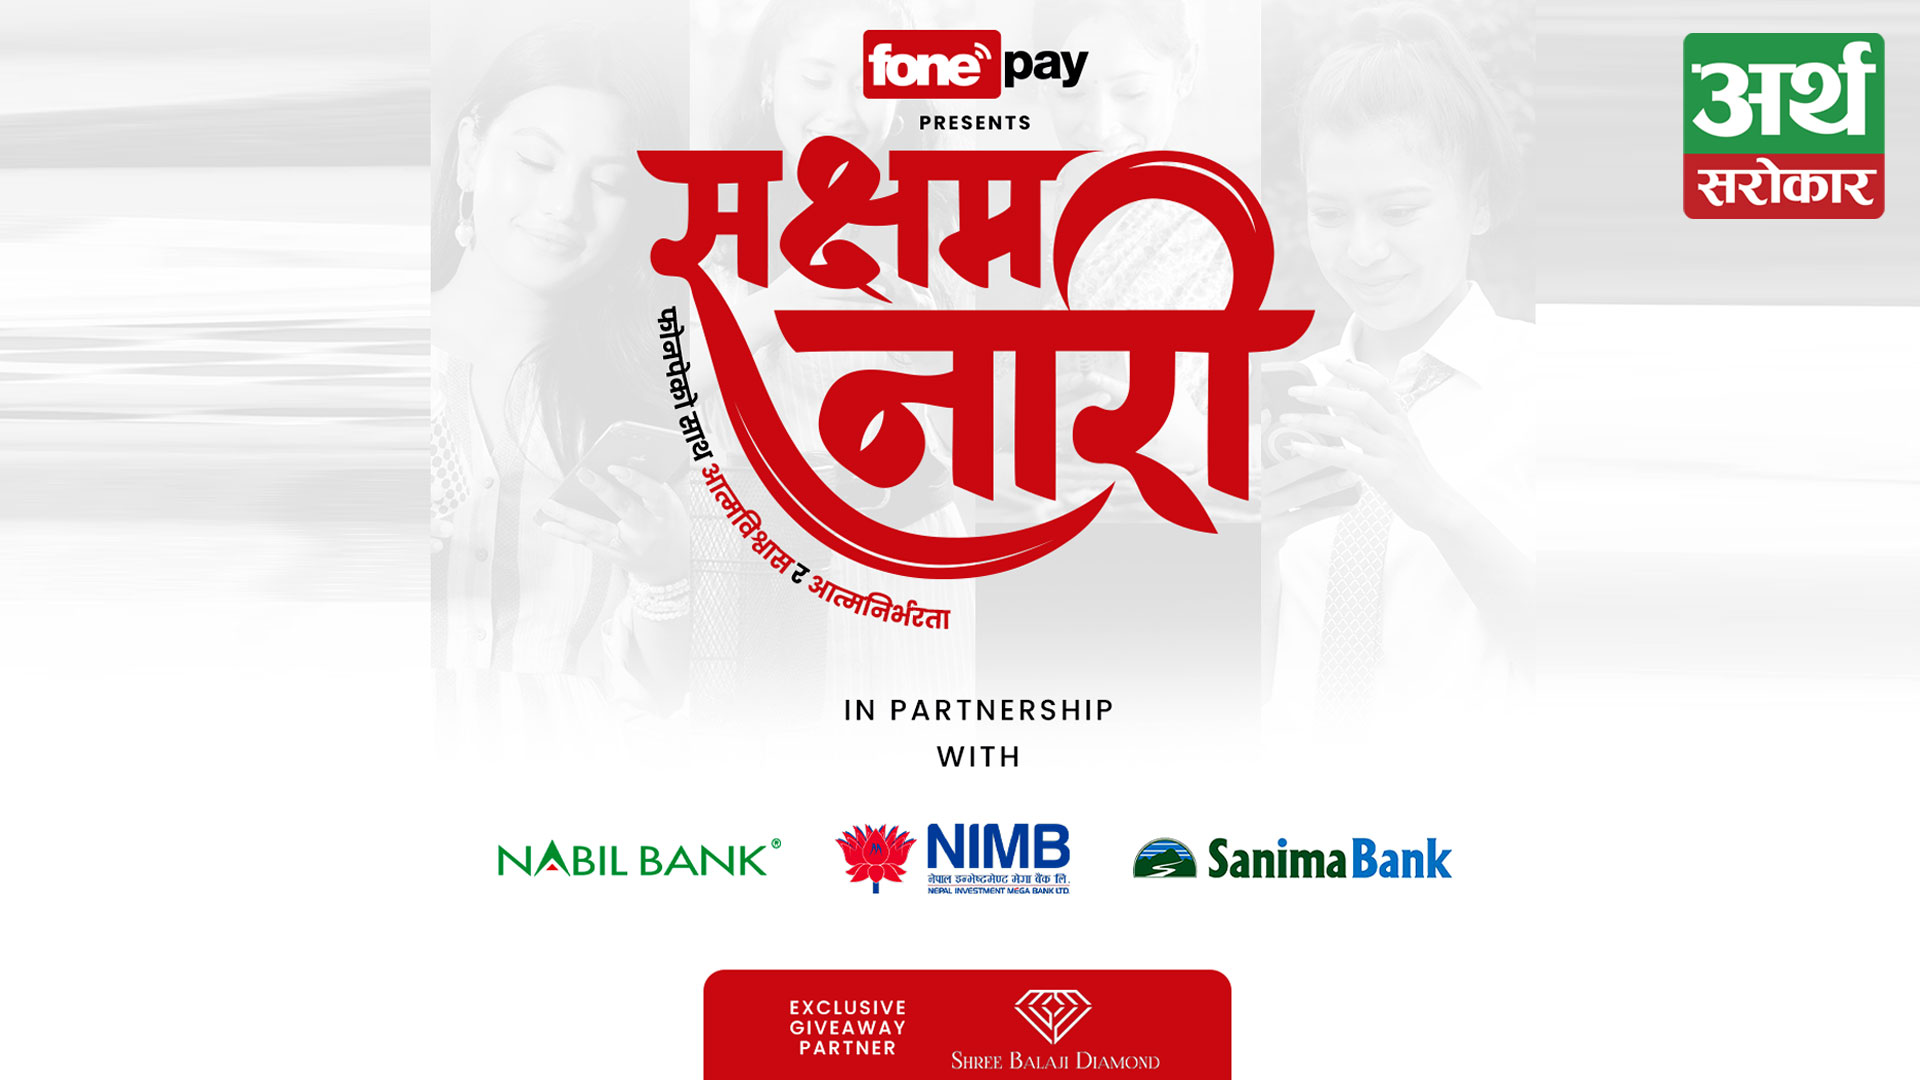 Fonepay Launches a Women-Centric ‘Sakshyam Naari’ Campaign